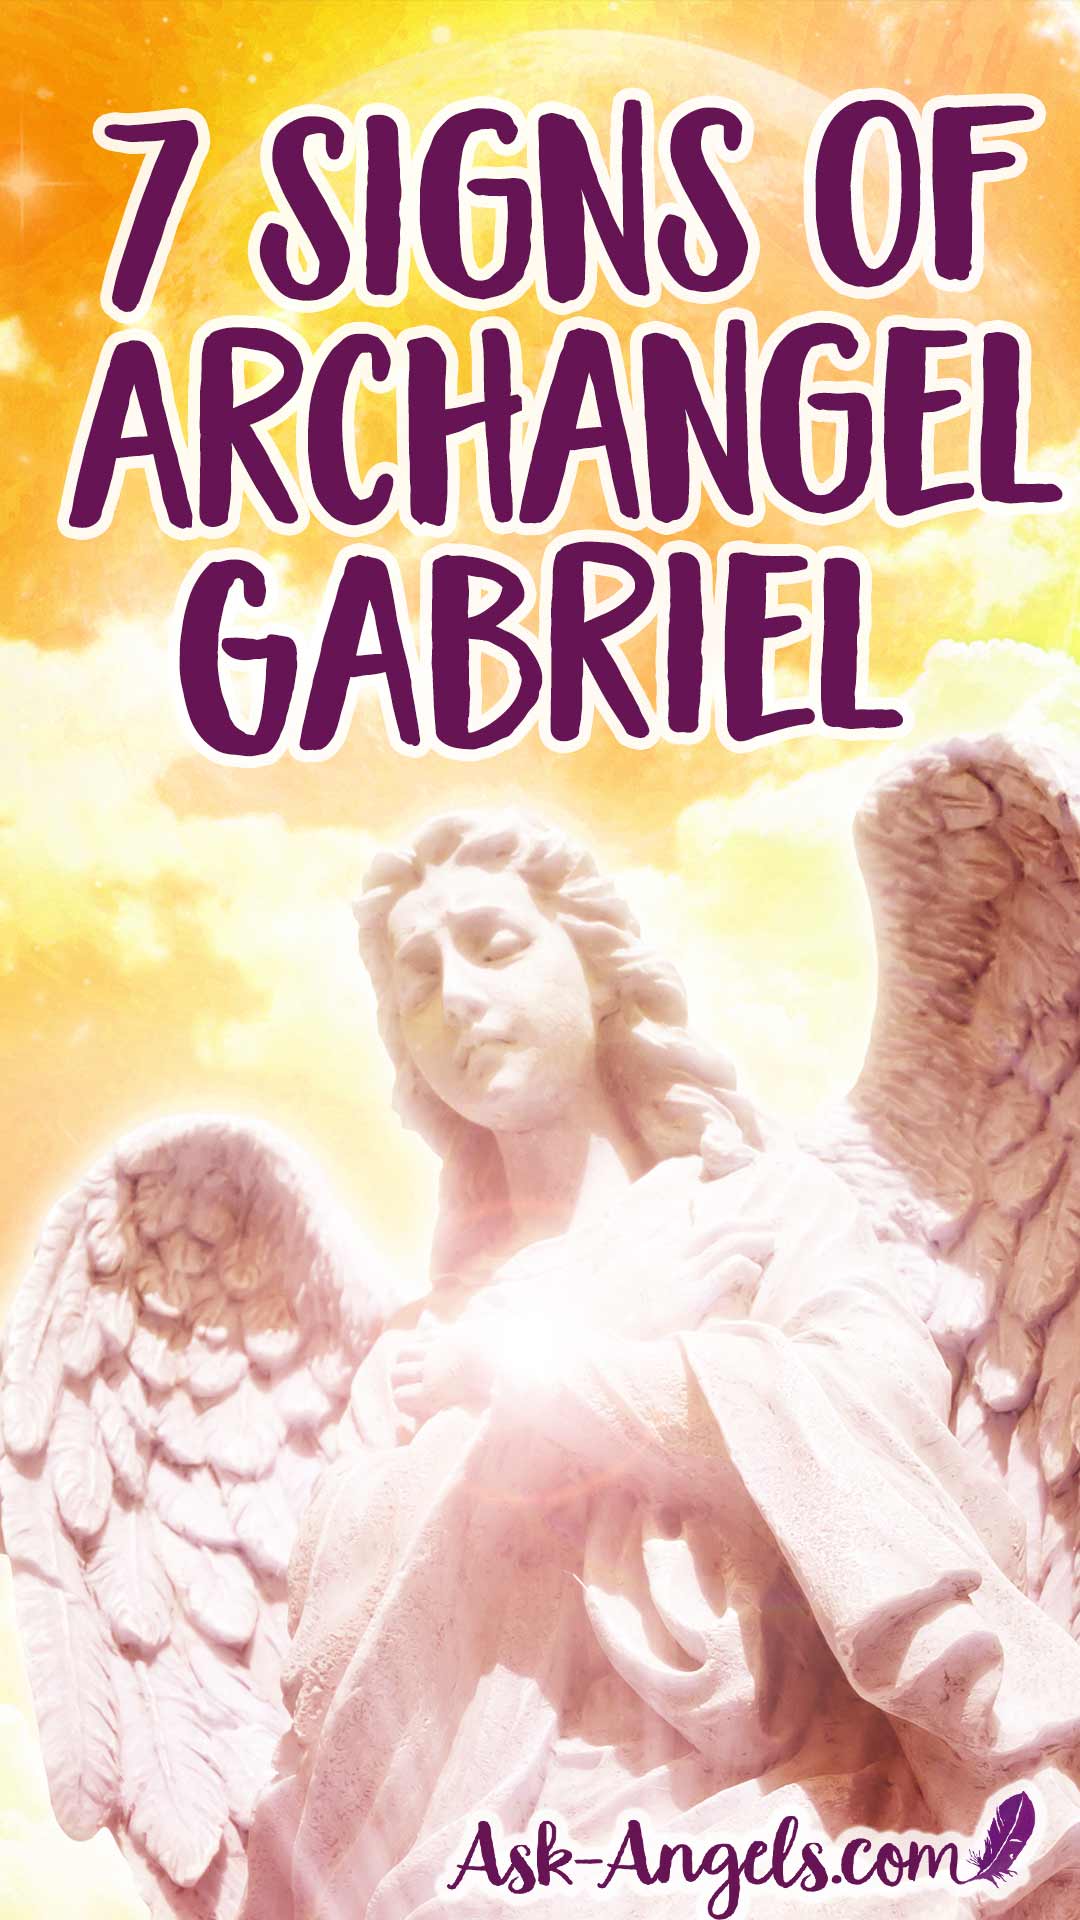 Top 7 Signs of Archangel Gabriel